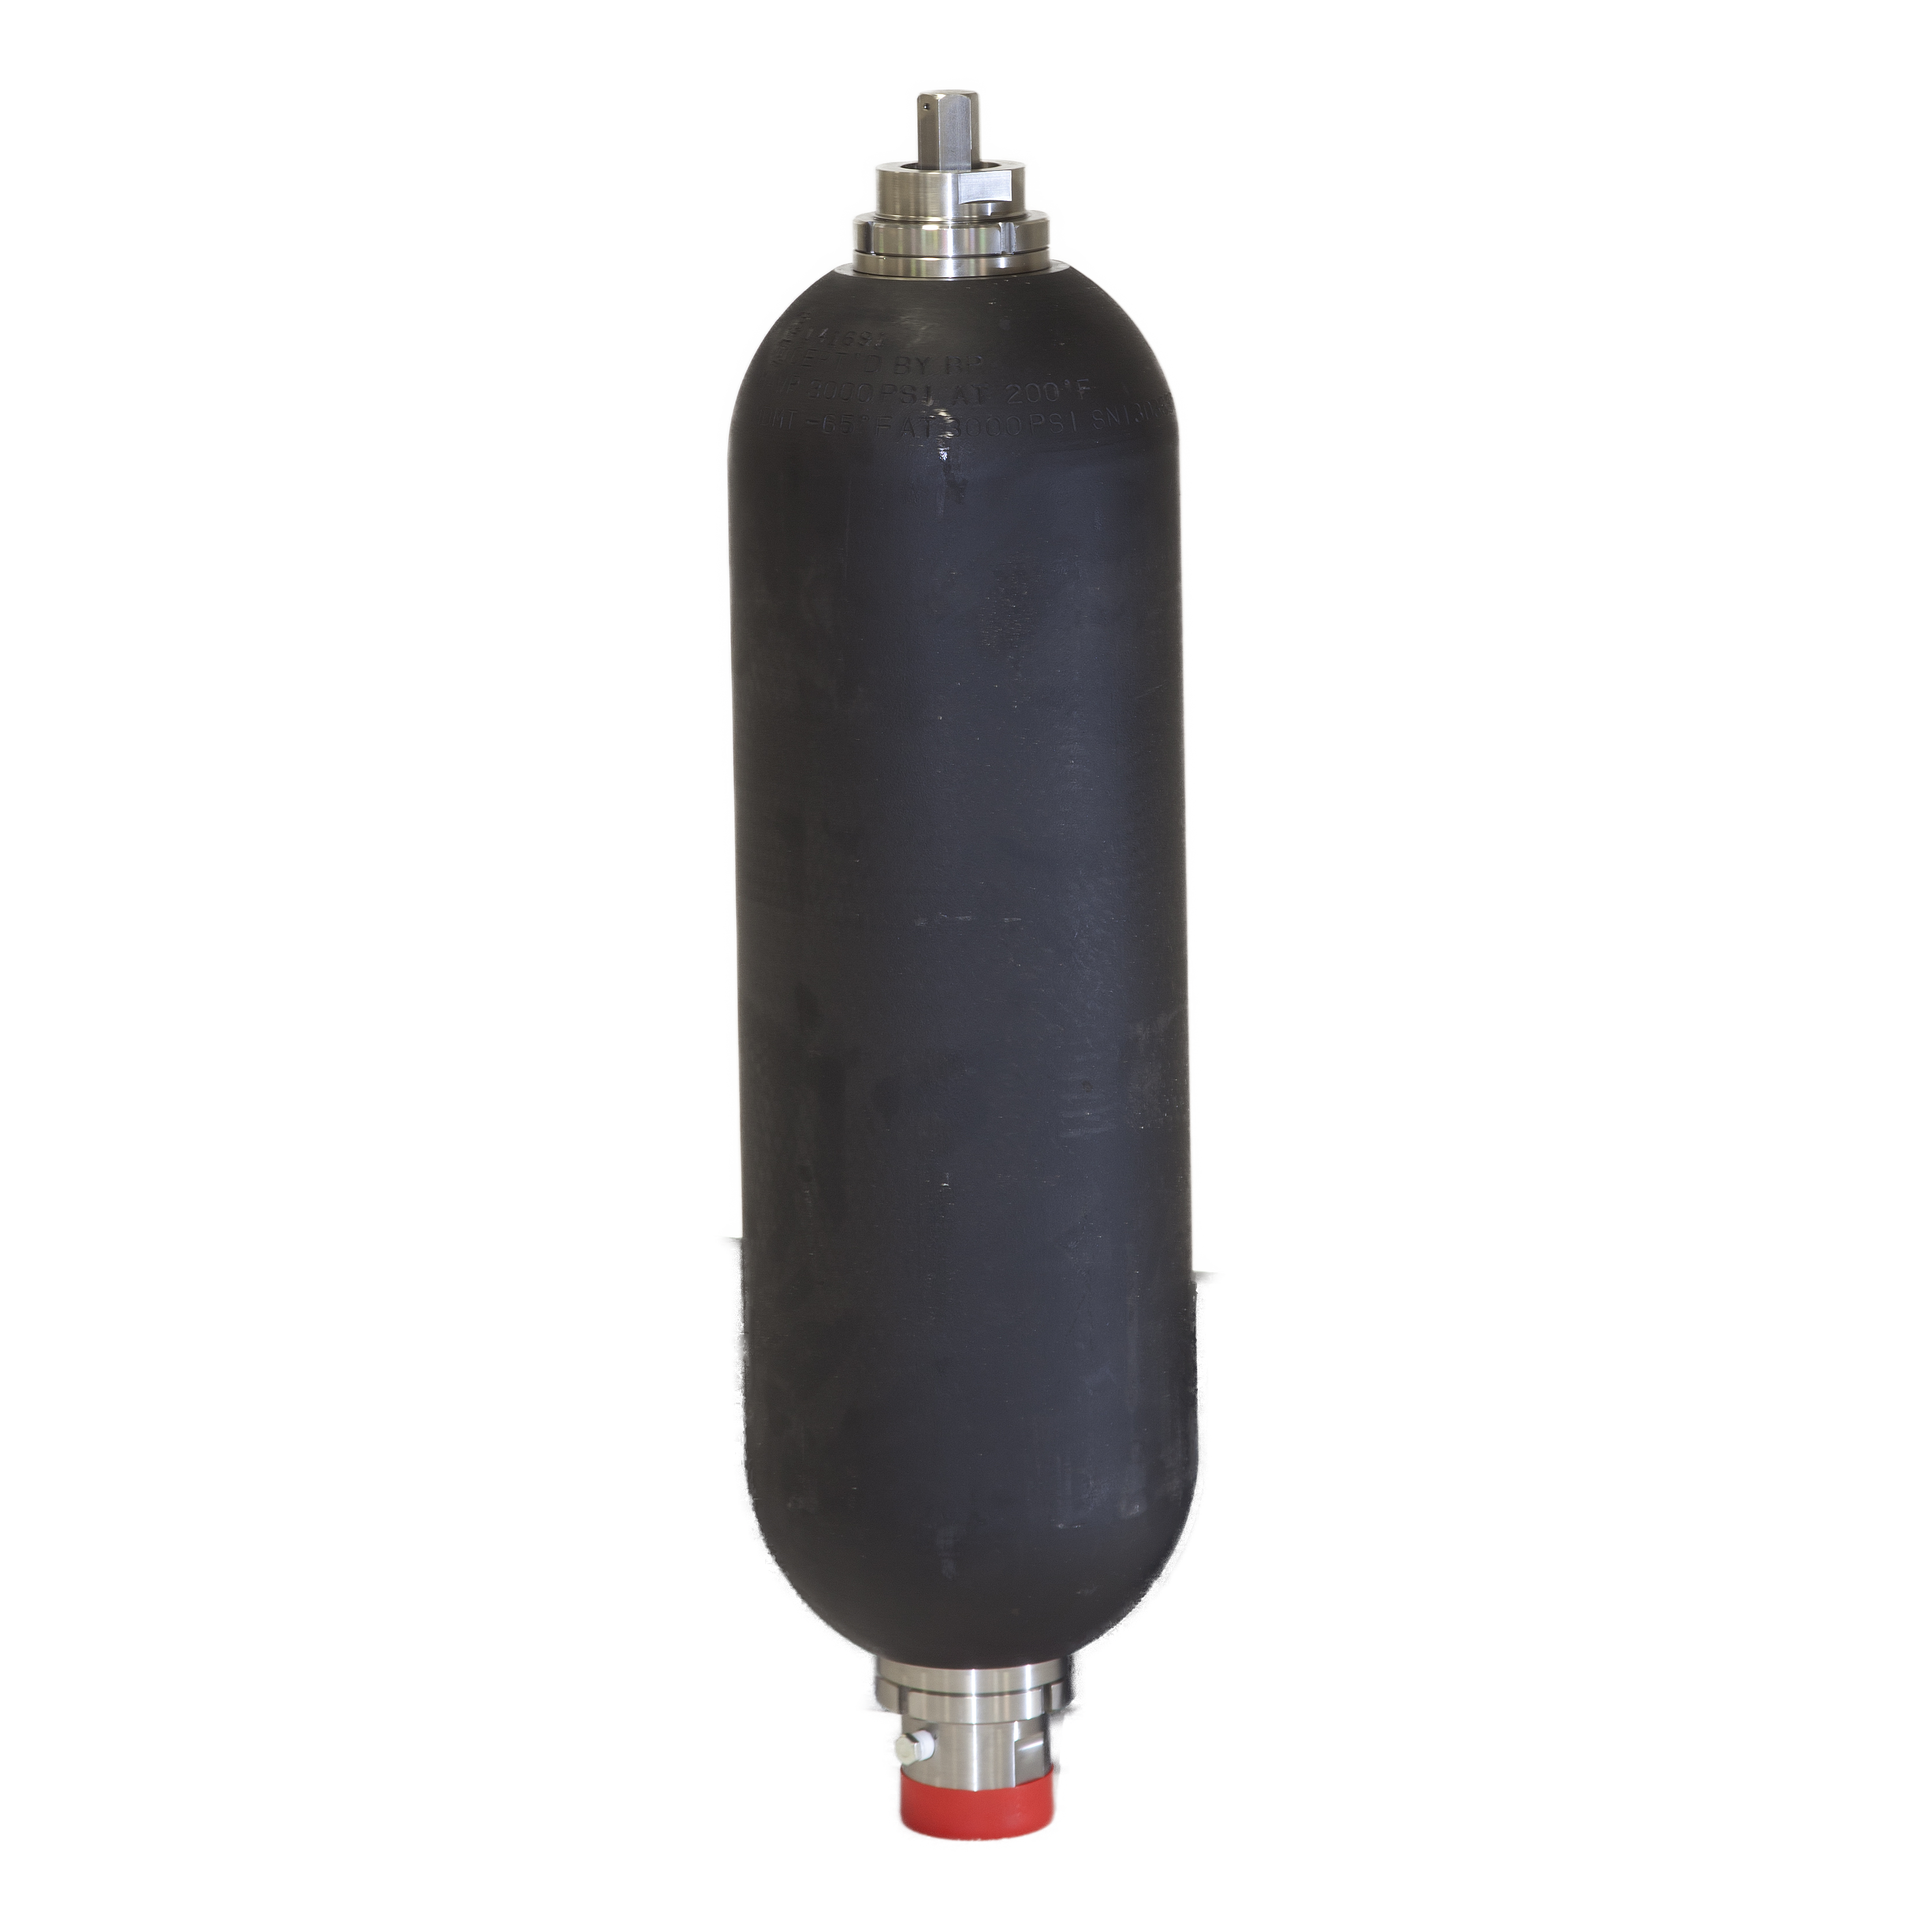 GB20-03-NE-N-O-1-A : SFP Gas Bottles 3000psi, 3000psi, 5 Gallon (20 Liter), 1.25" NPT